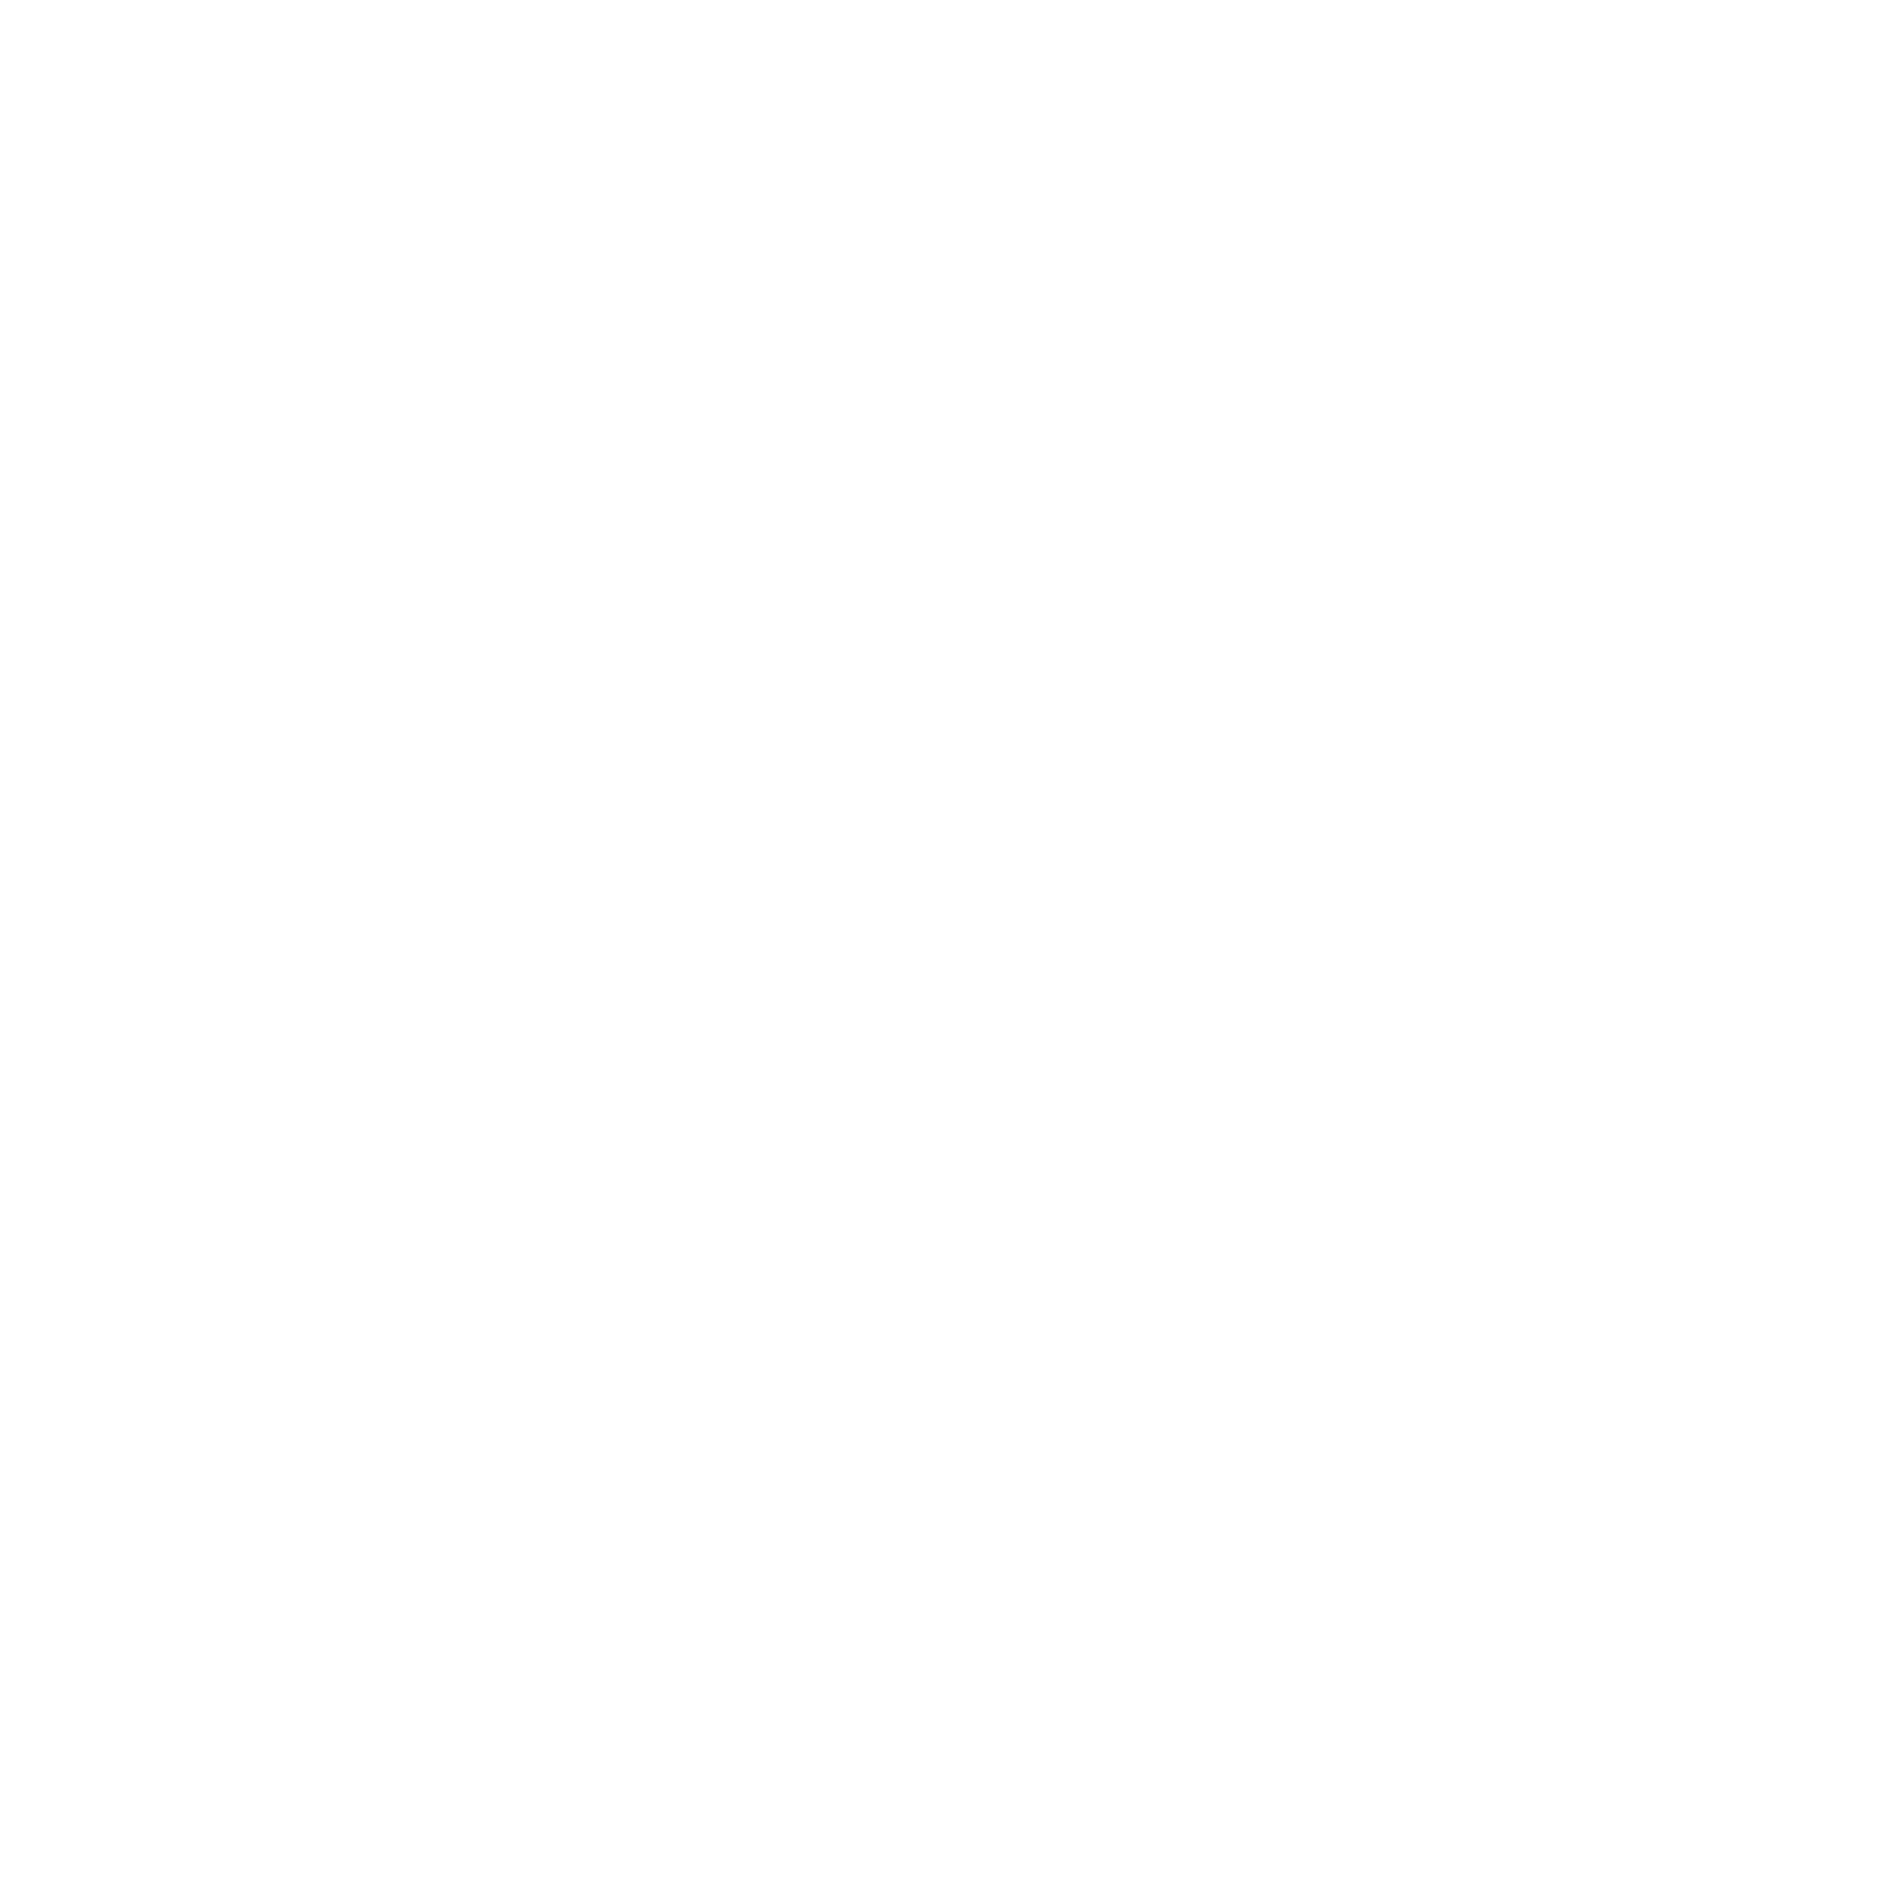 Meyer Beheer wit op transparant-01.png